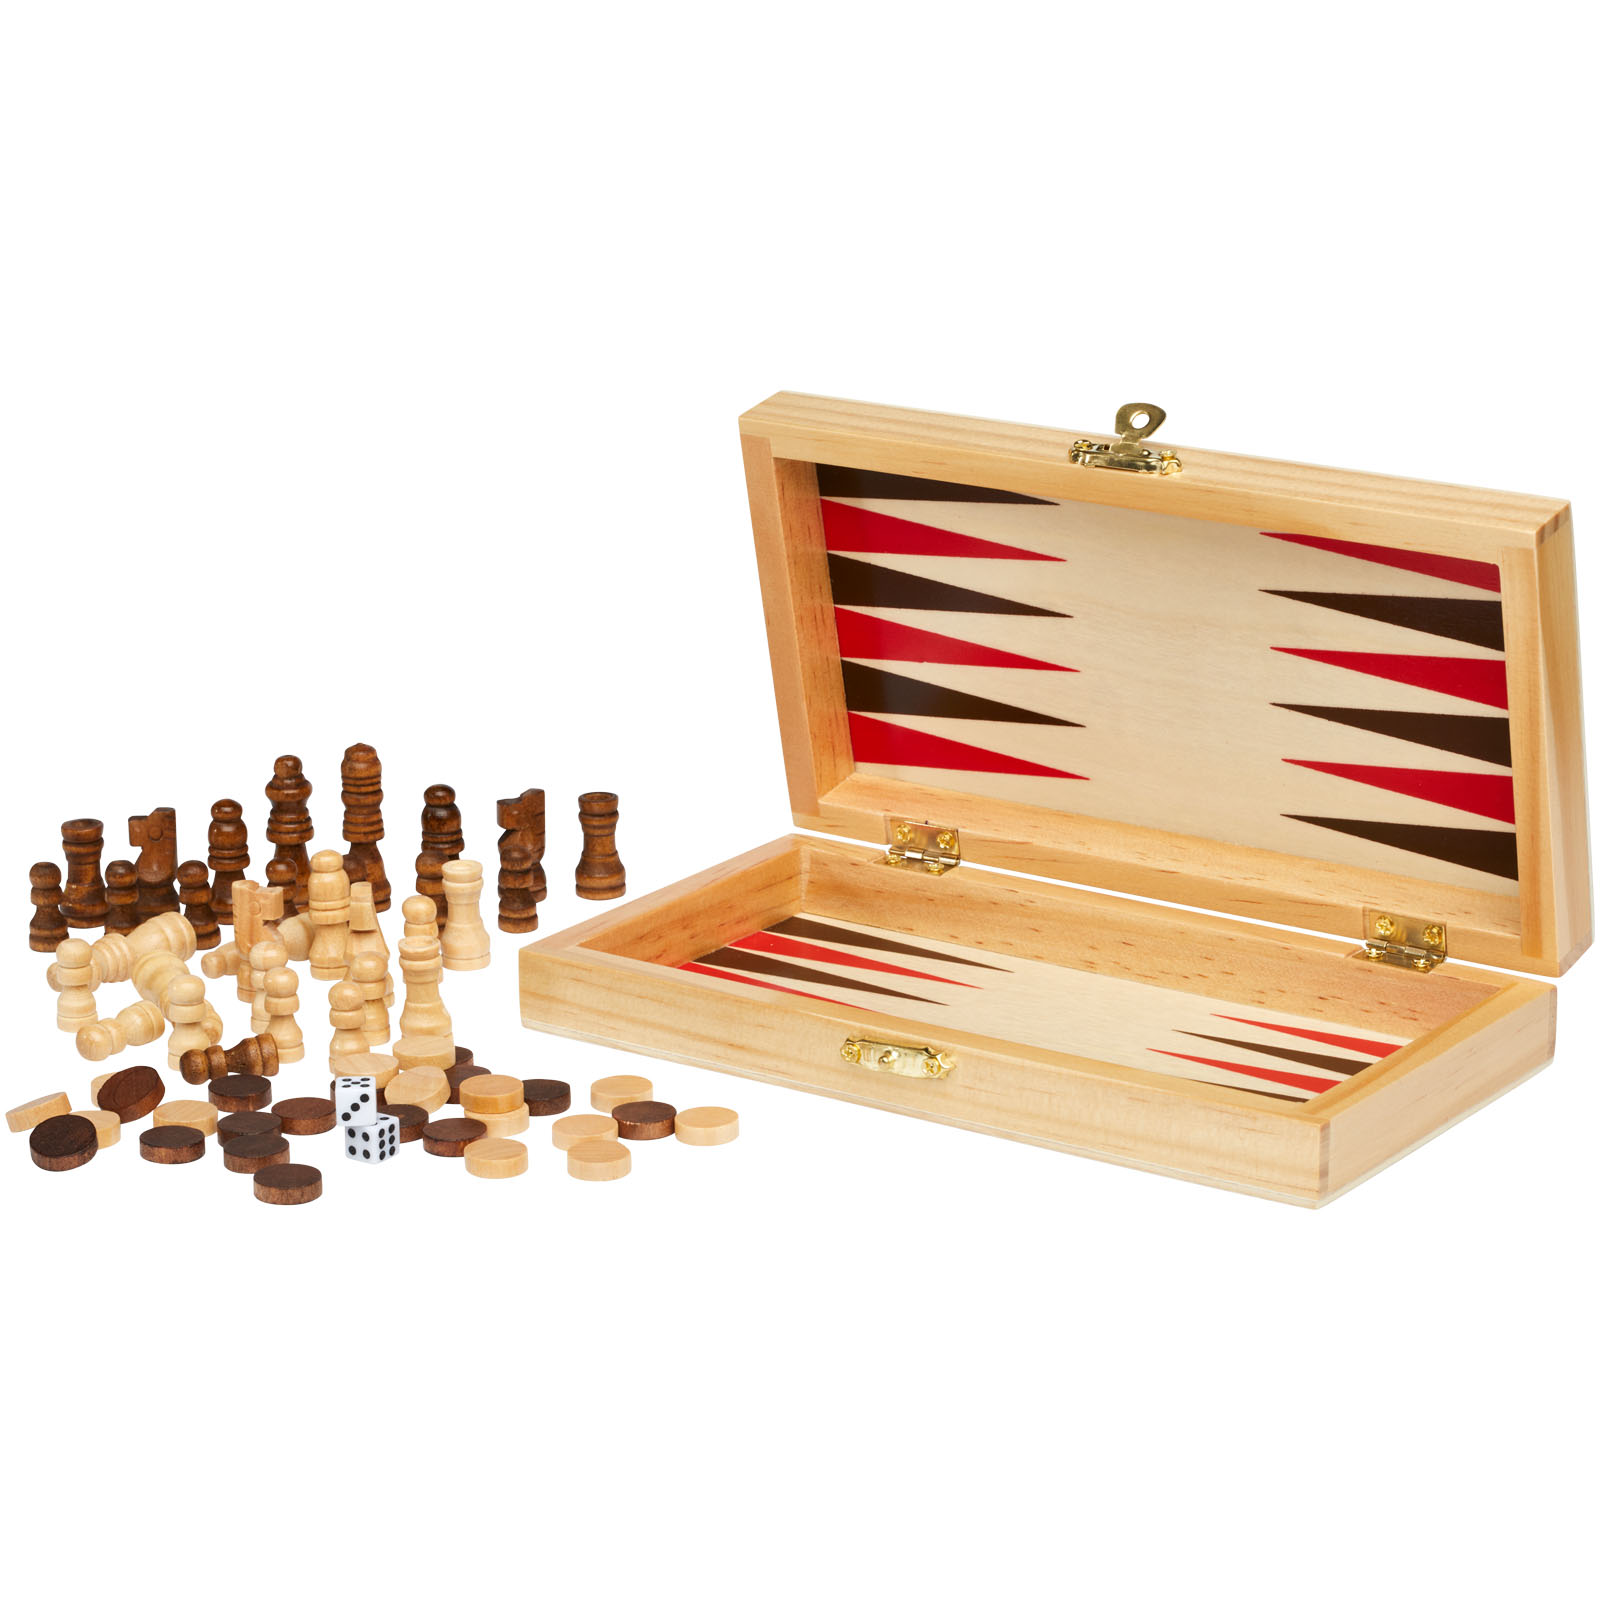 Toys & Games - Mugo 3-in-1 wooden game set